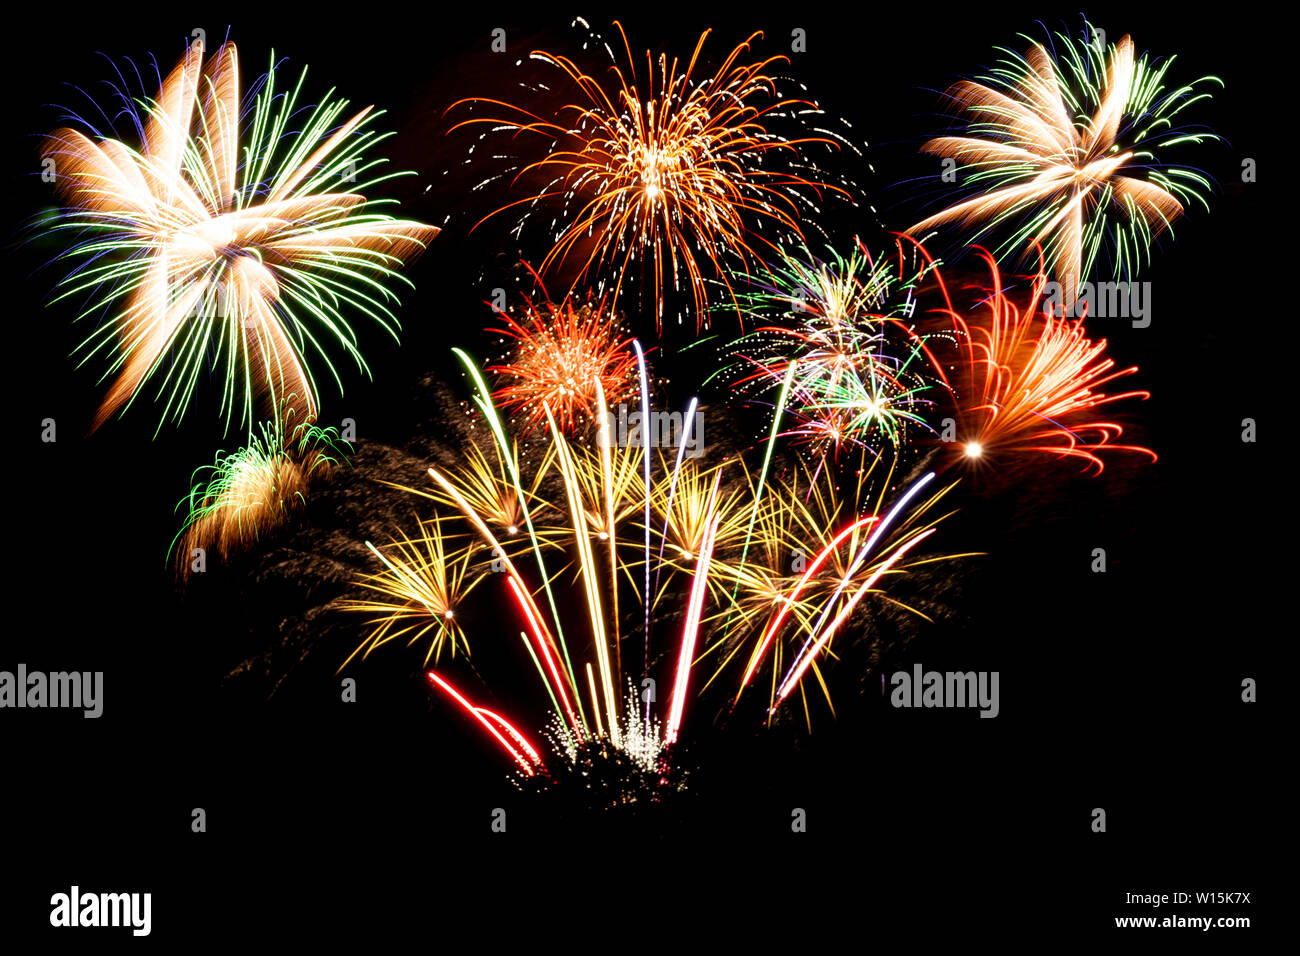 Big firework display with multiple fireworks in the dark black sky Stock Photo